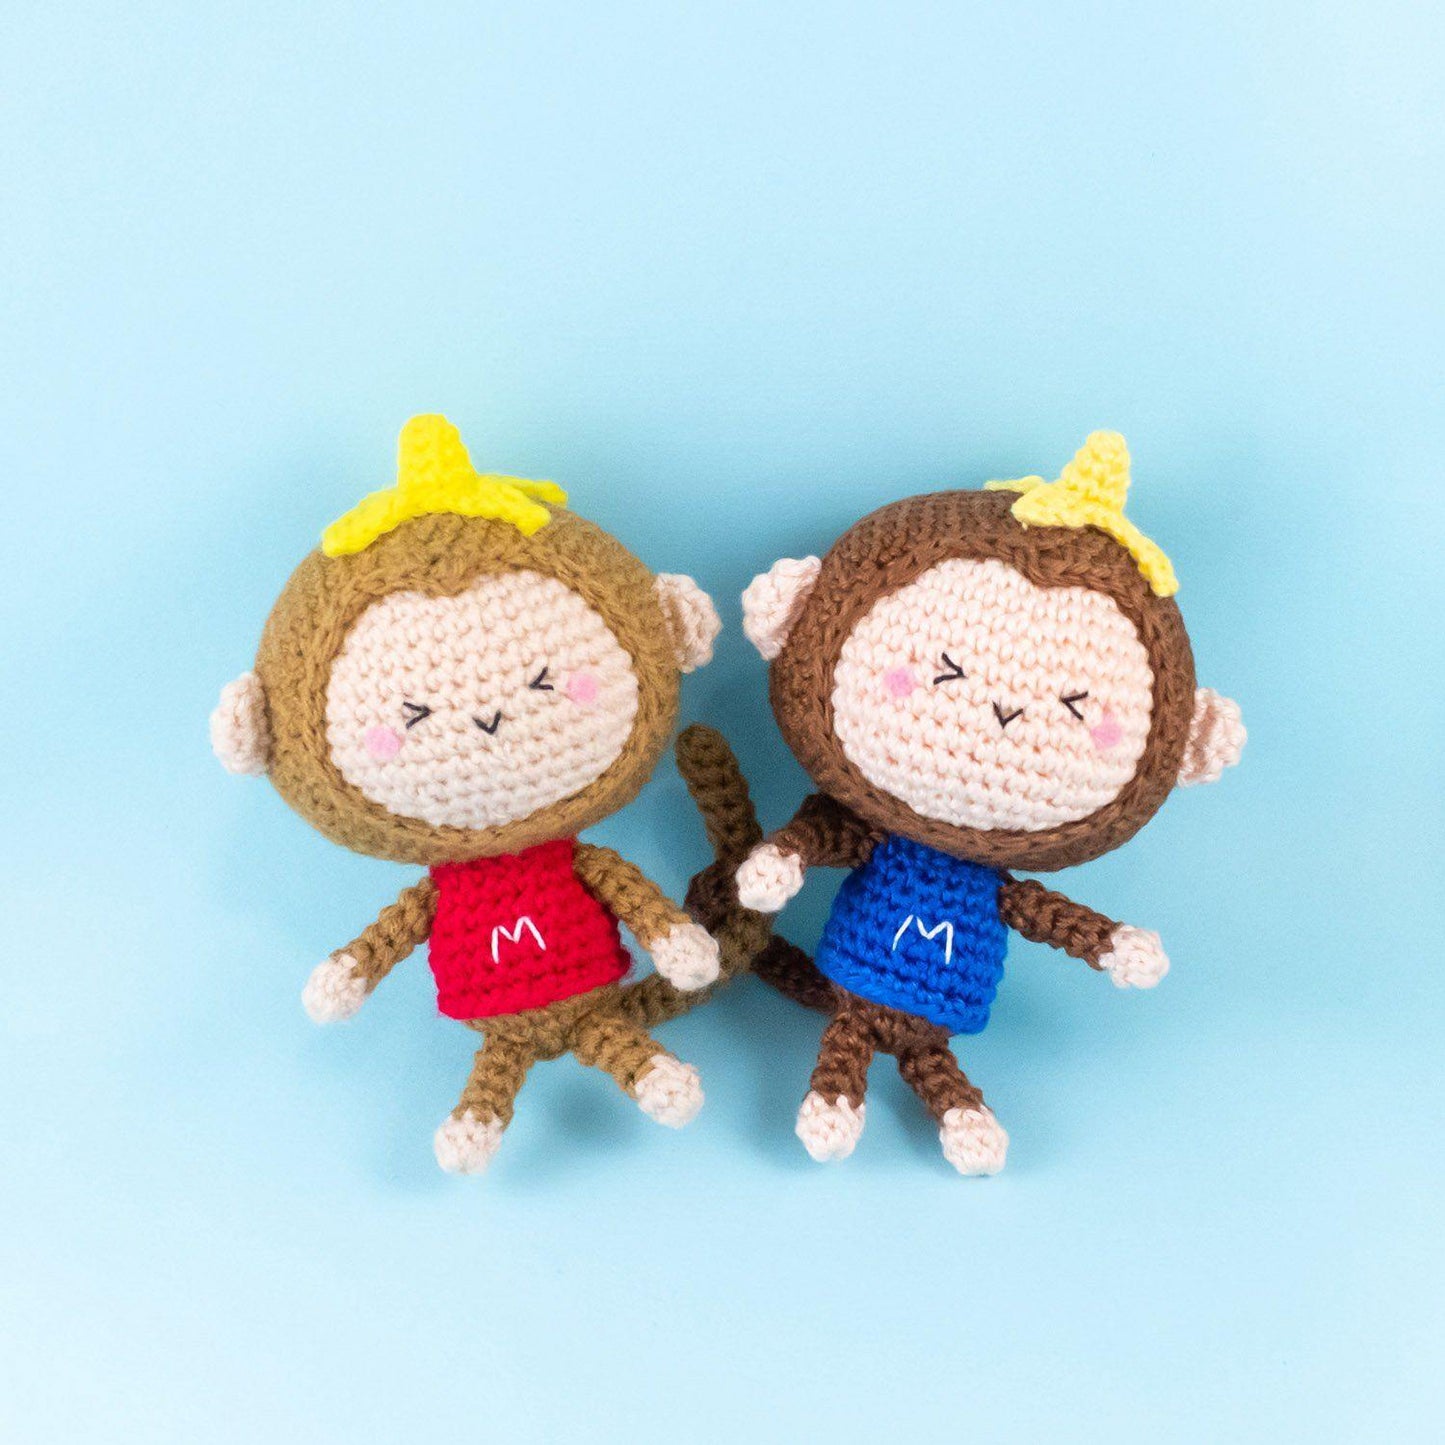 DIY Monkey stuffed animal crochet pattern